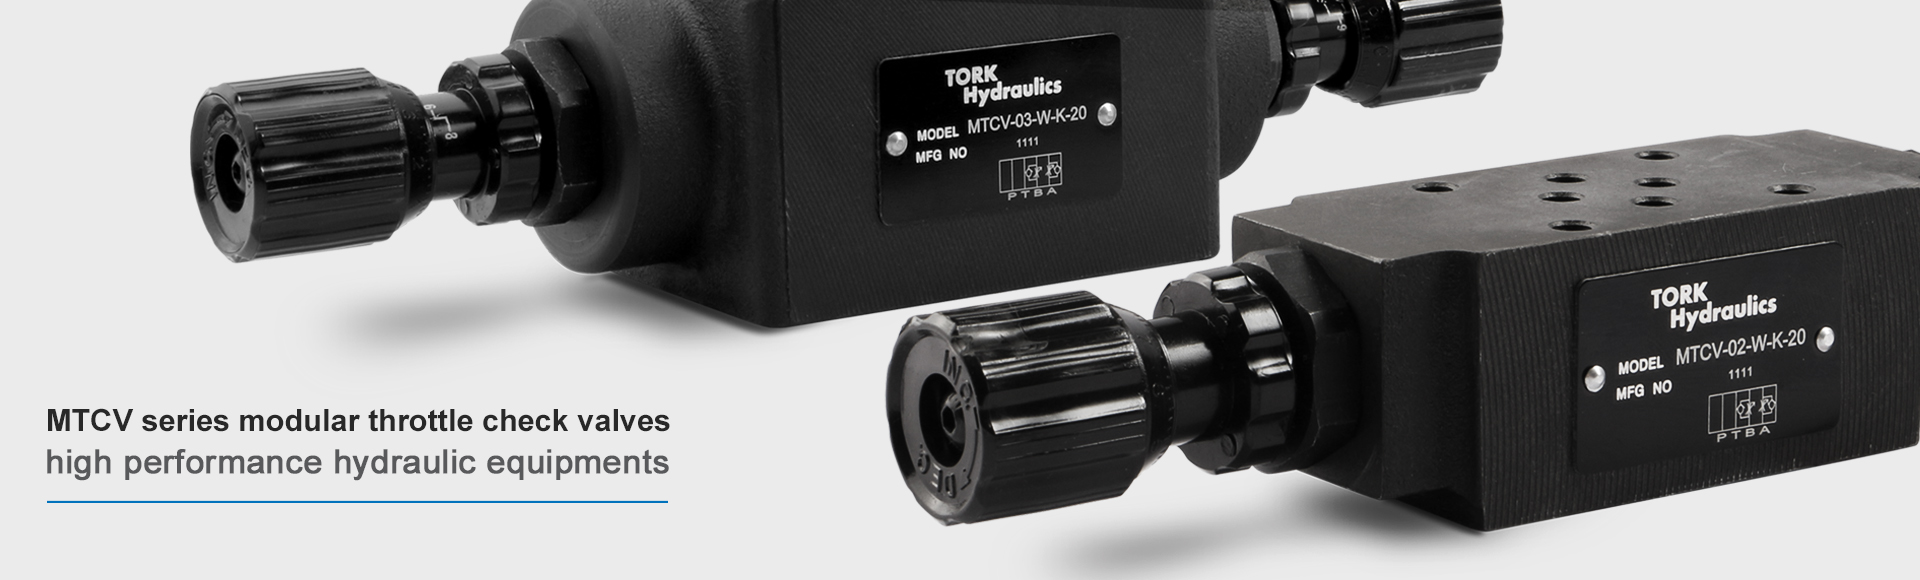 Tork hydraulics rexroth yuken electric hand valve